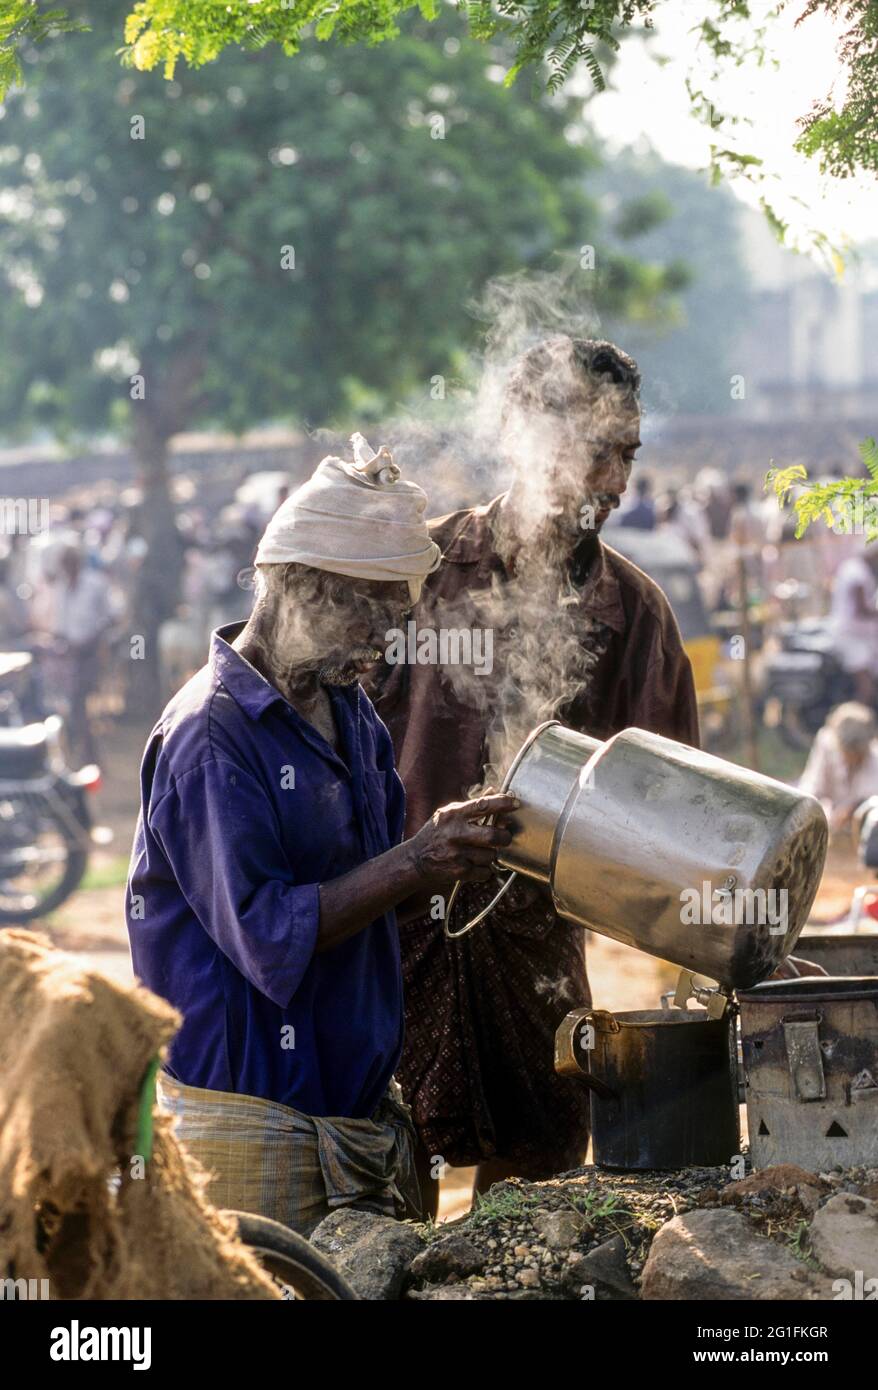 Tamilnadu style boiler tea Kadai